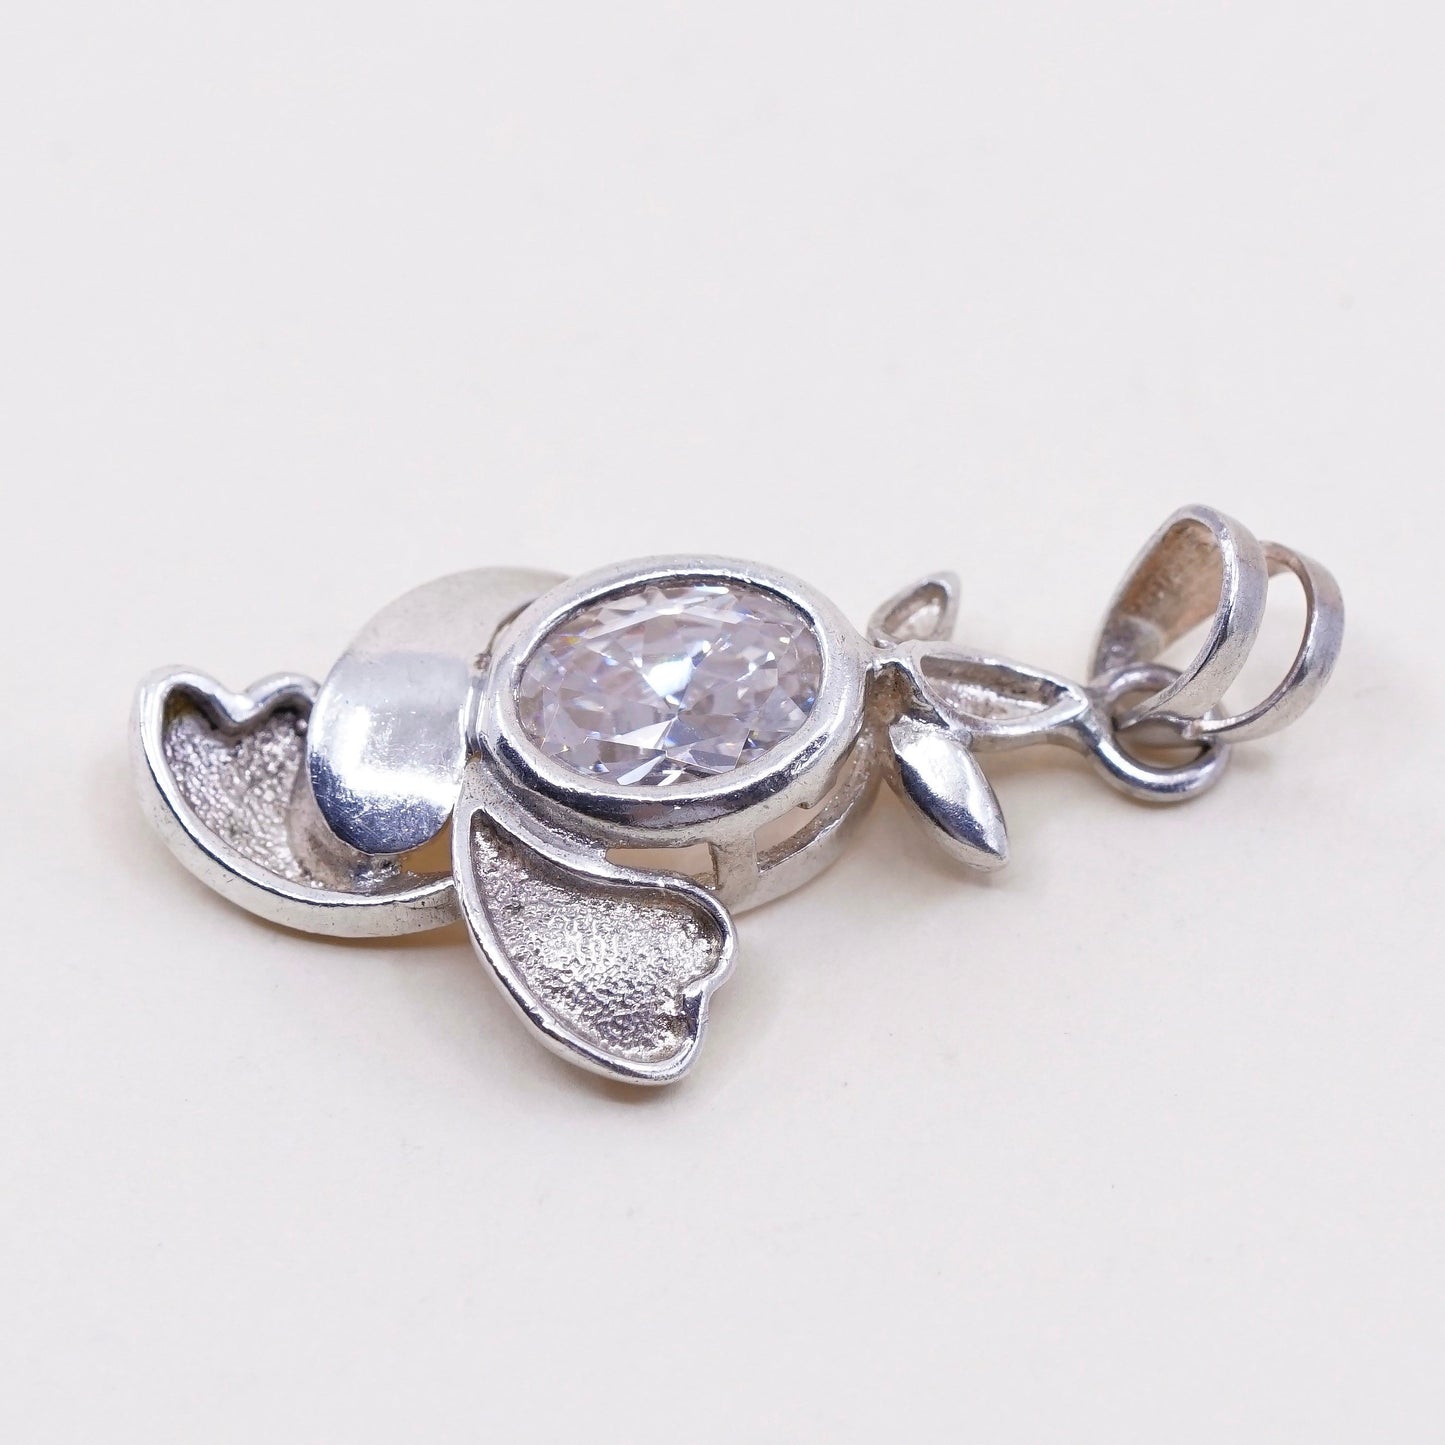 Vintage CCJ sterling silver cz crystal pendant, 925 silver pendant